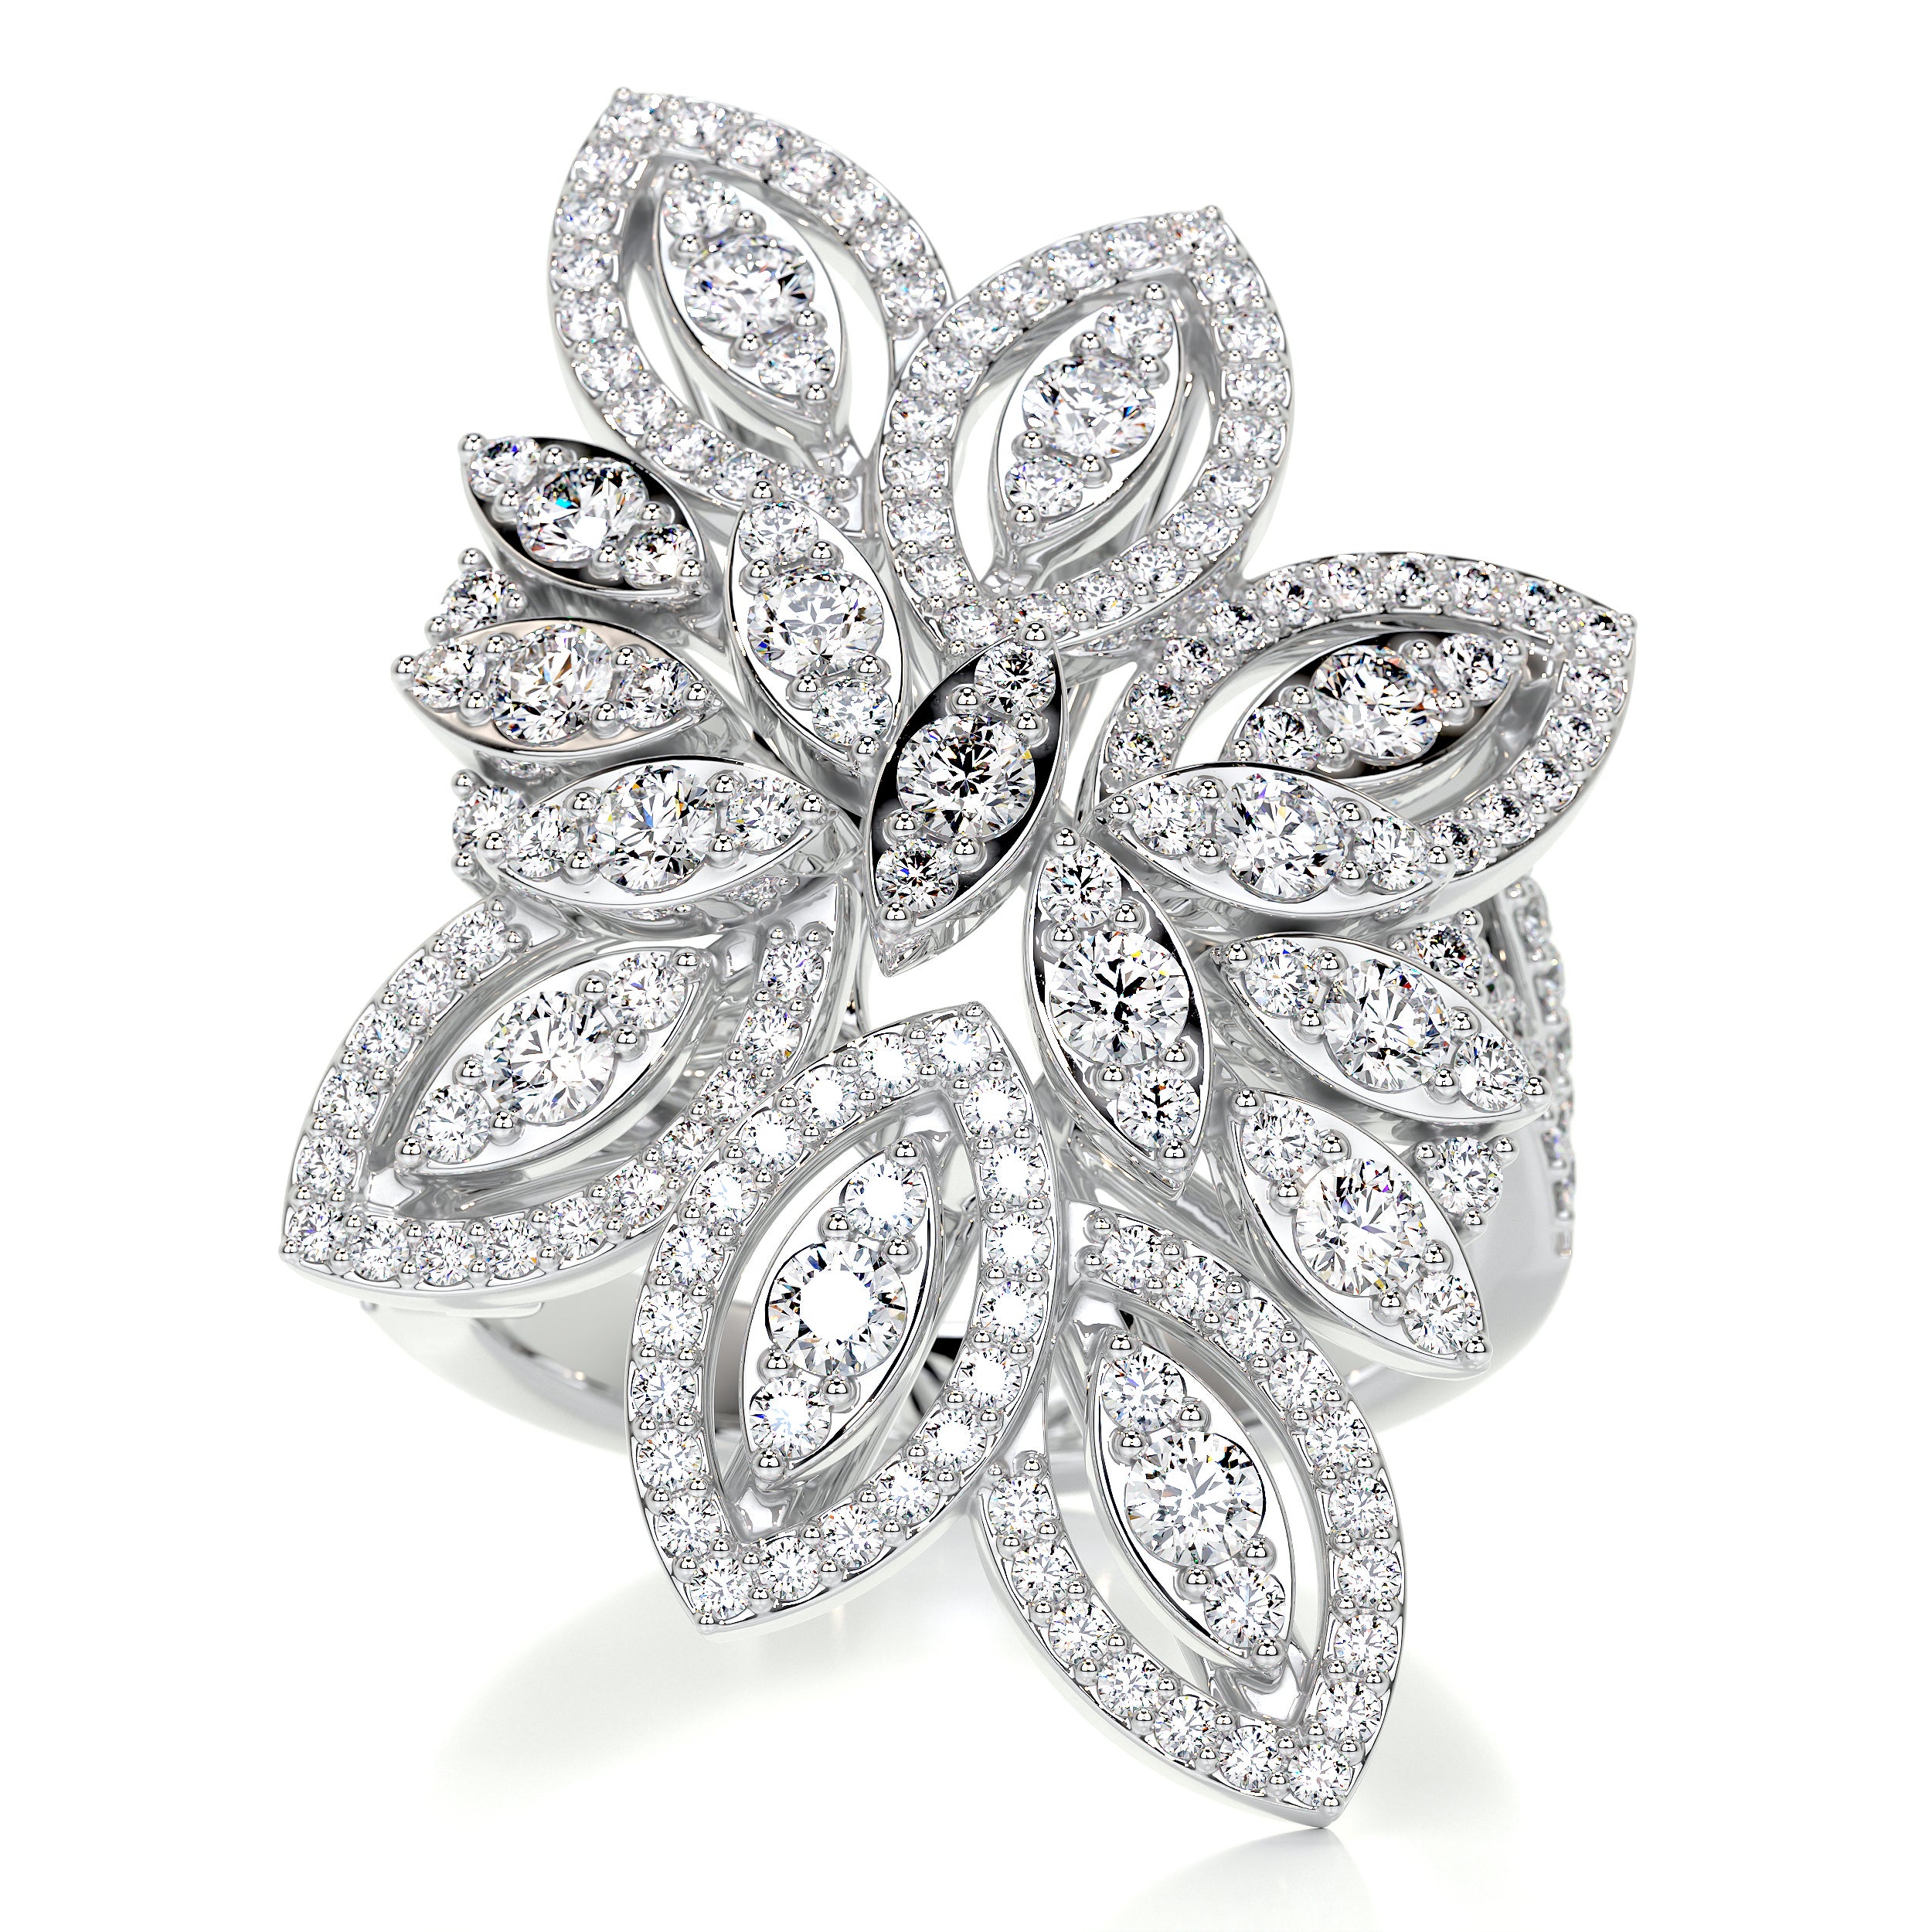 Flowing Floral 18k White Gold + Diamond Ring | White gold diamond rings, White  gold diamonds, White gold